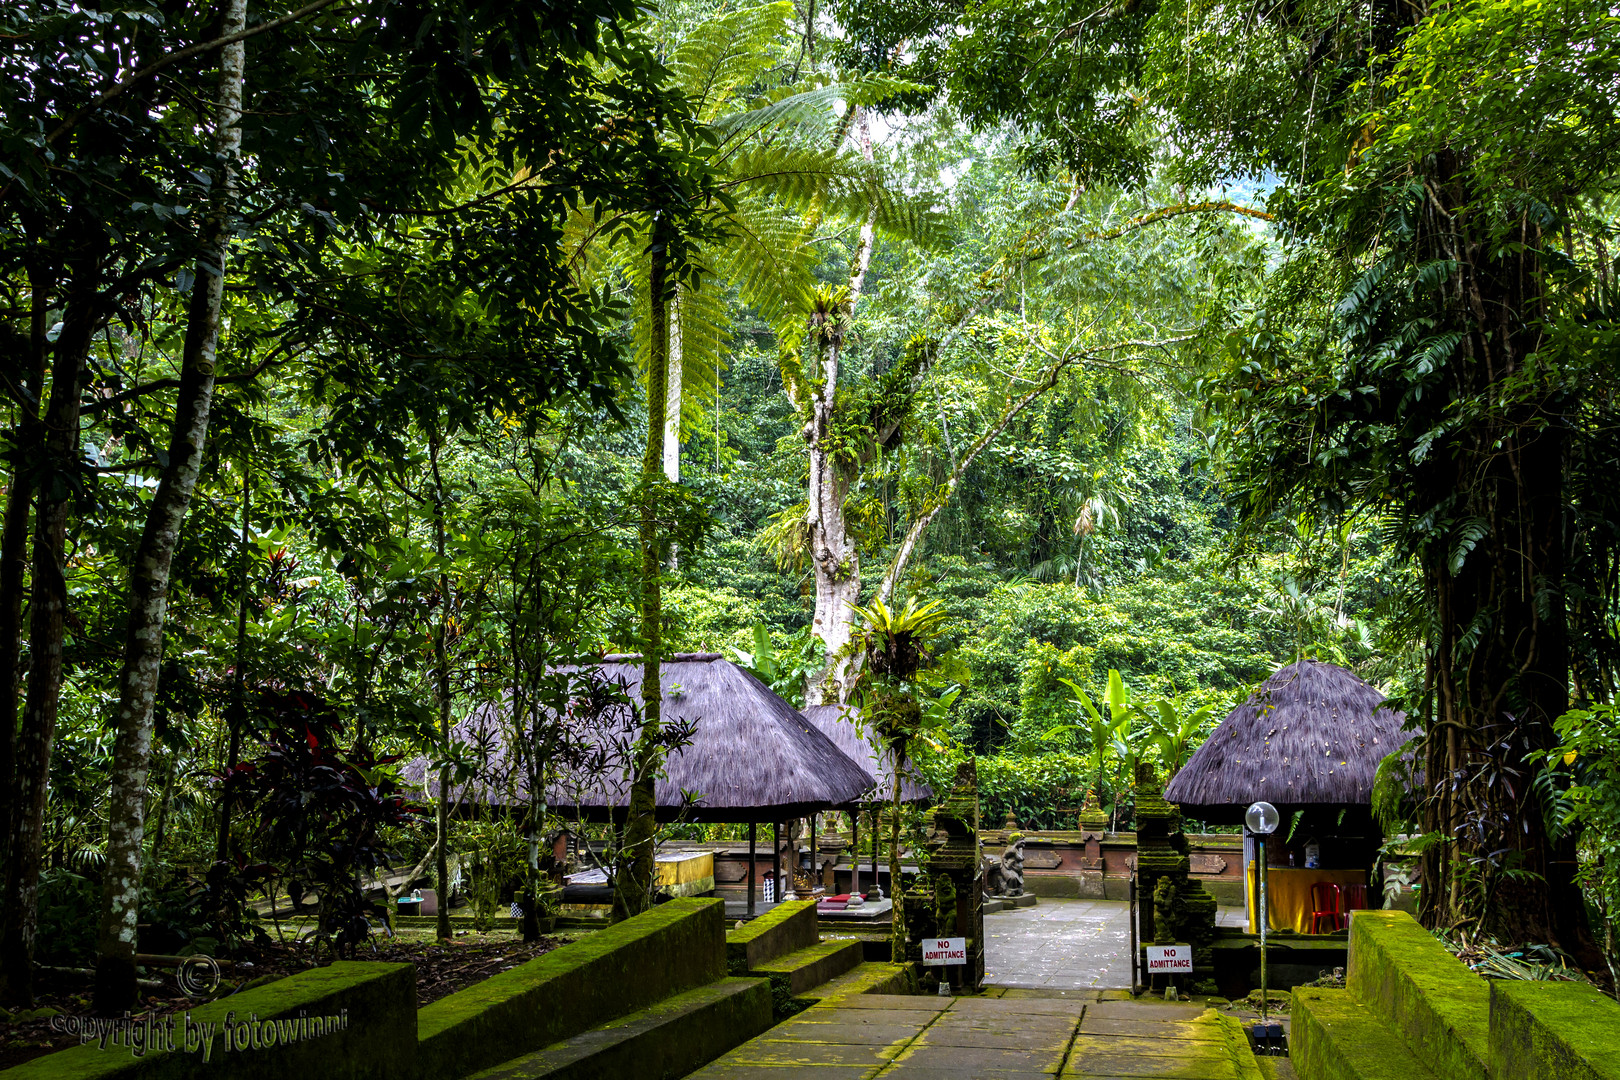 Bali - Urwaldtempel